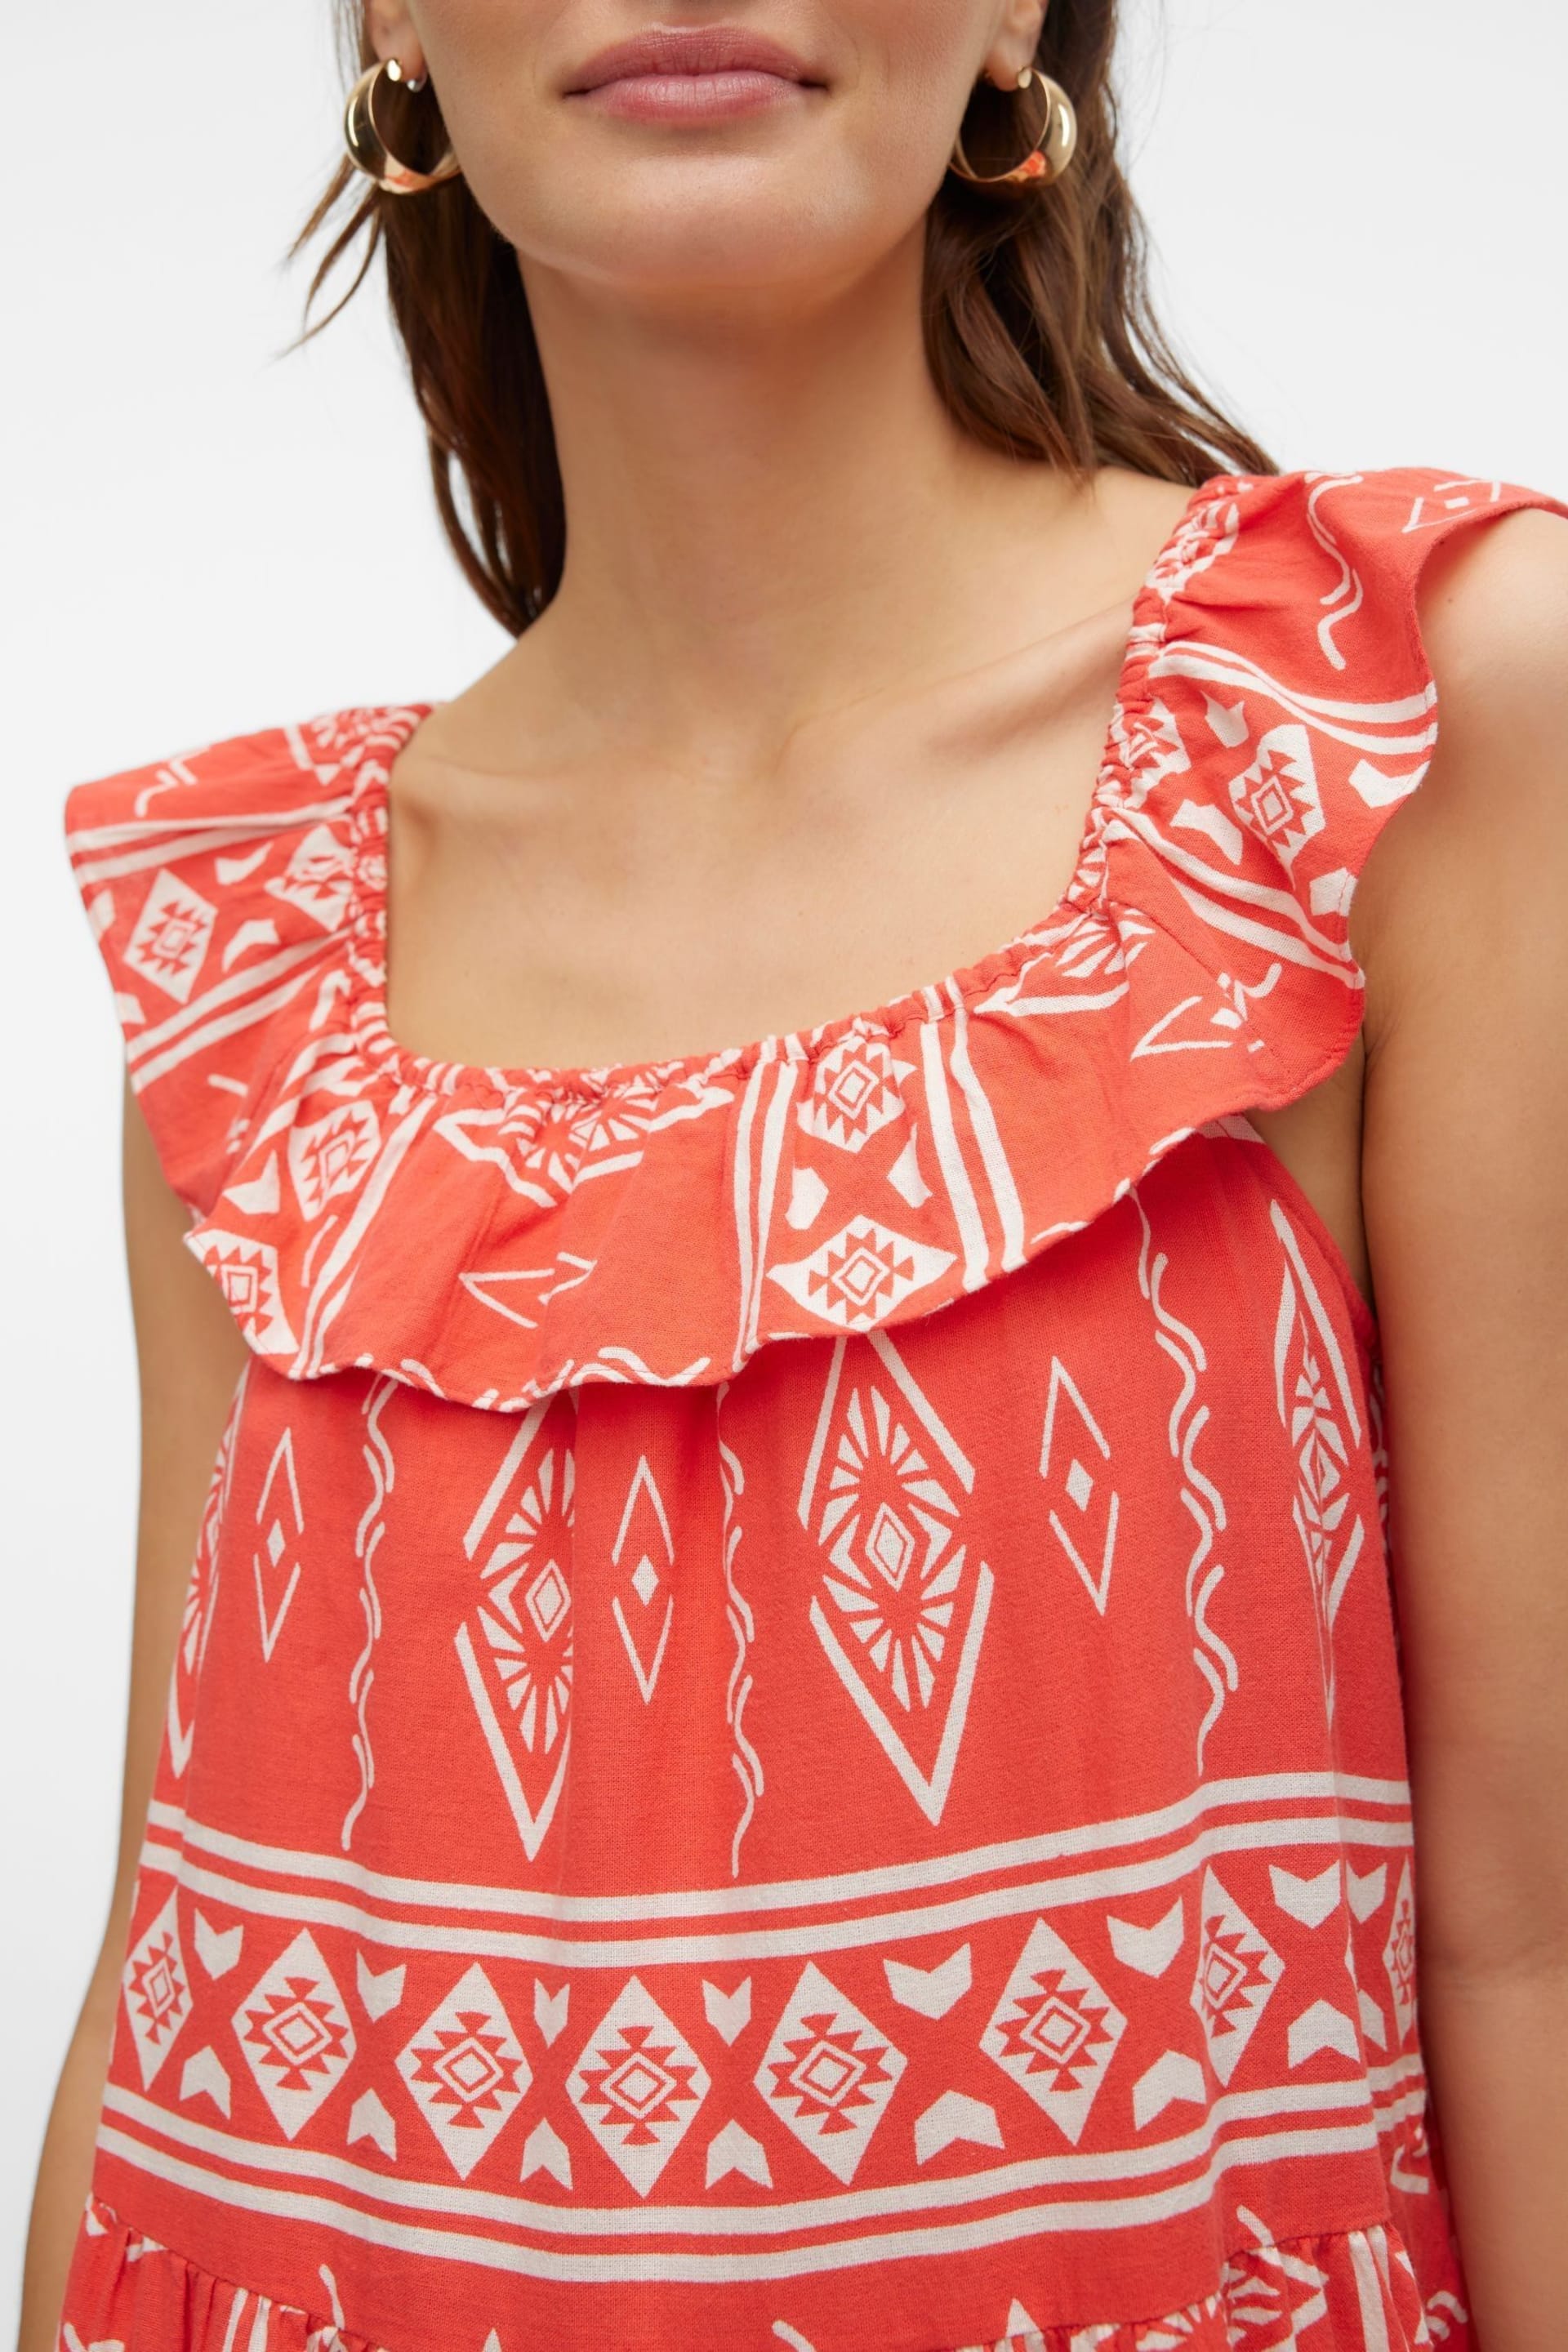 VERO MODA Pink Aztec Print Ruffle Summer Maxi Dress - Image 4 of 7